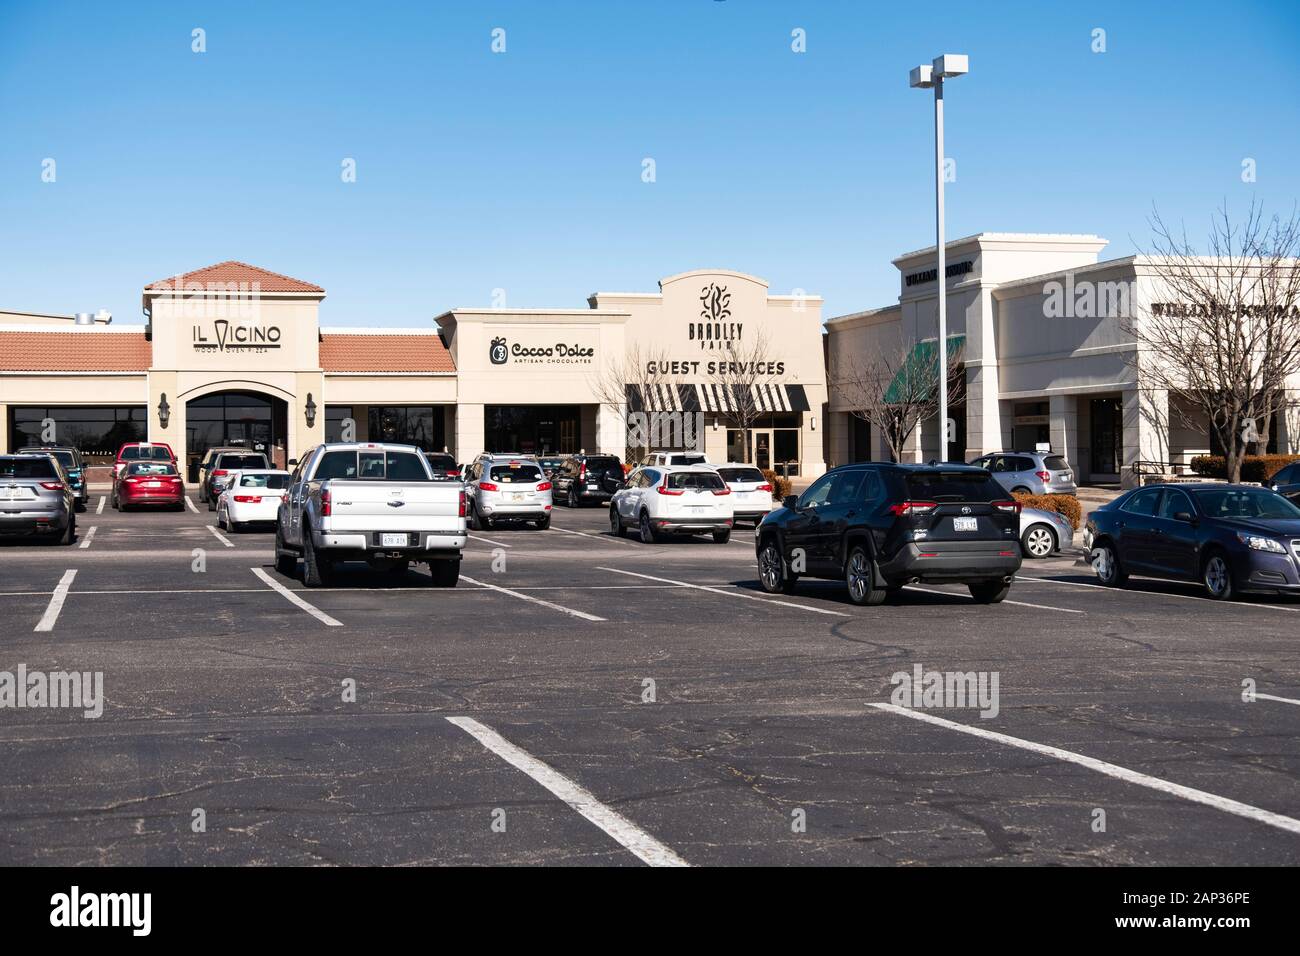 Bradley Fair shopping center in Wichita, Kansas, USA. Parking lot, chocolate shop and pizzeria. Stock Photo